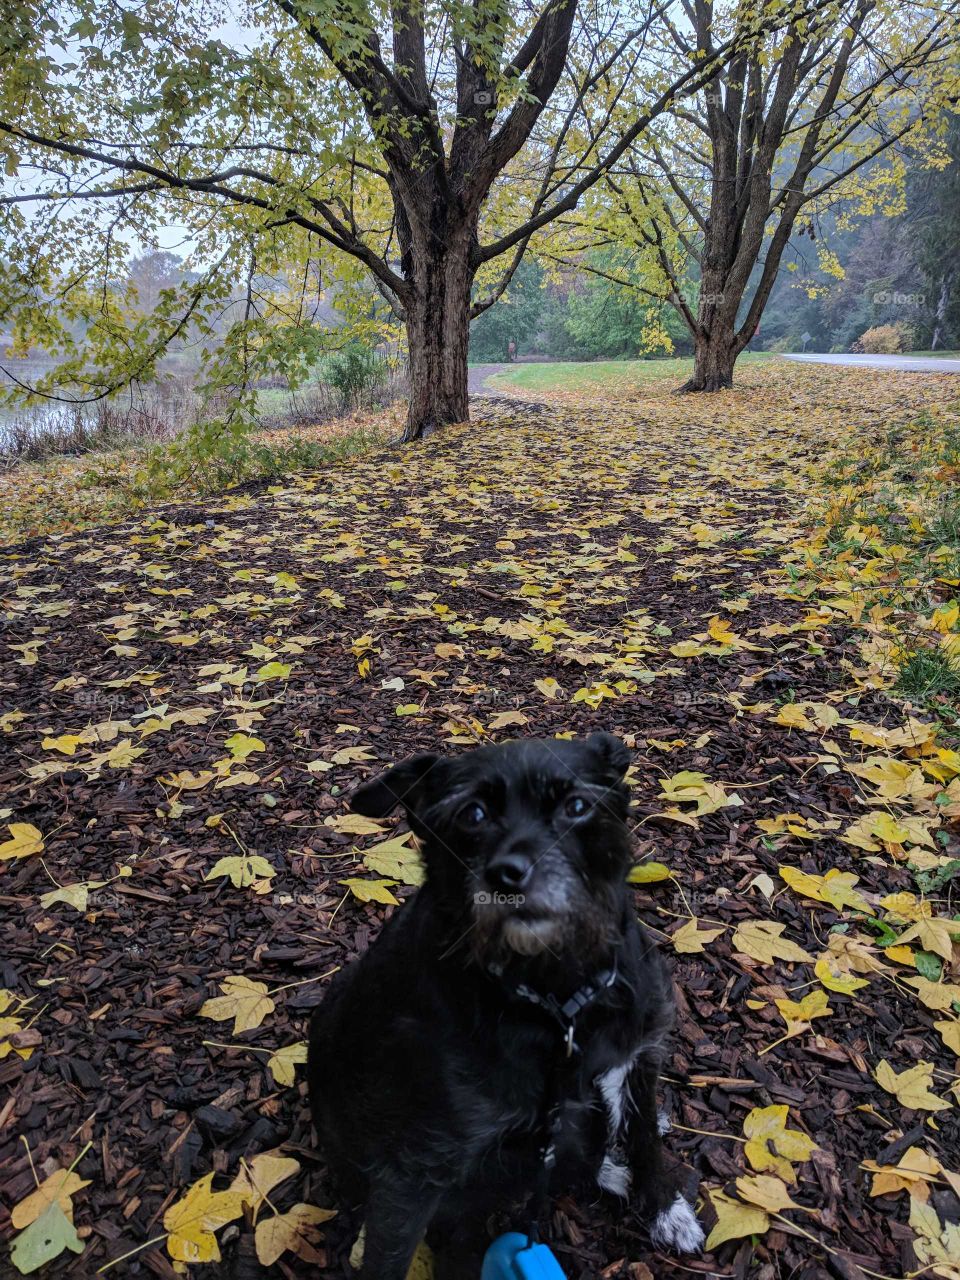 KC enjoying the leaves